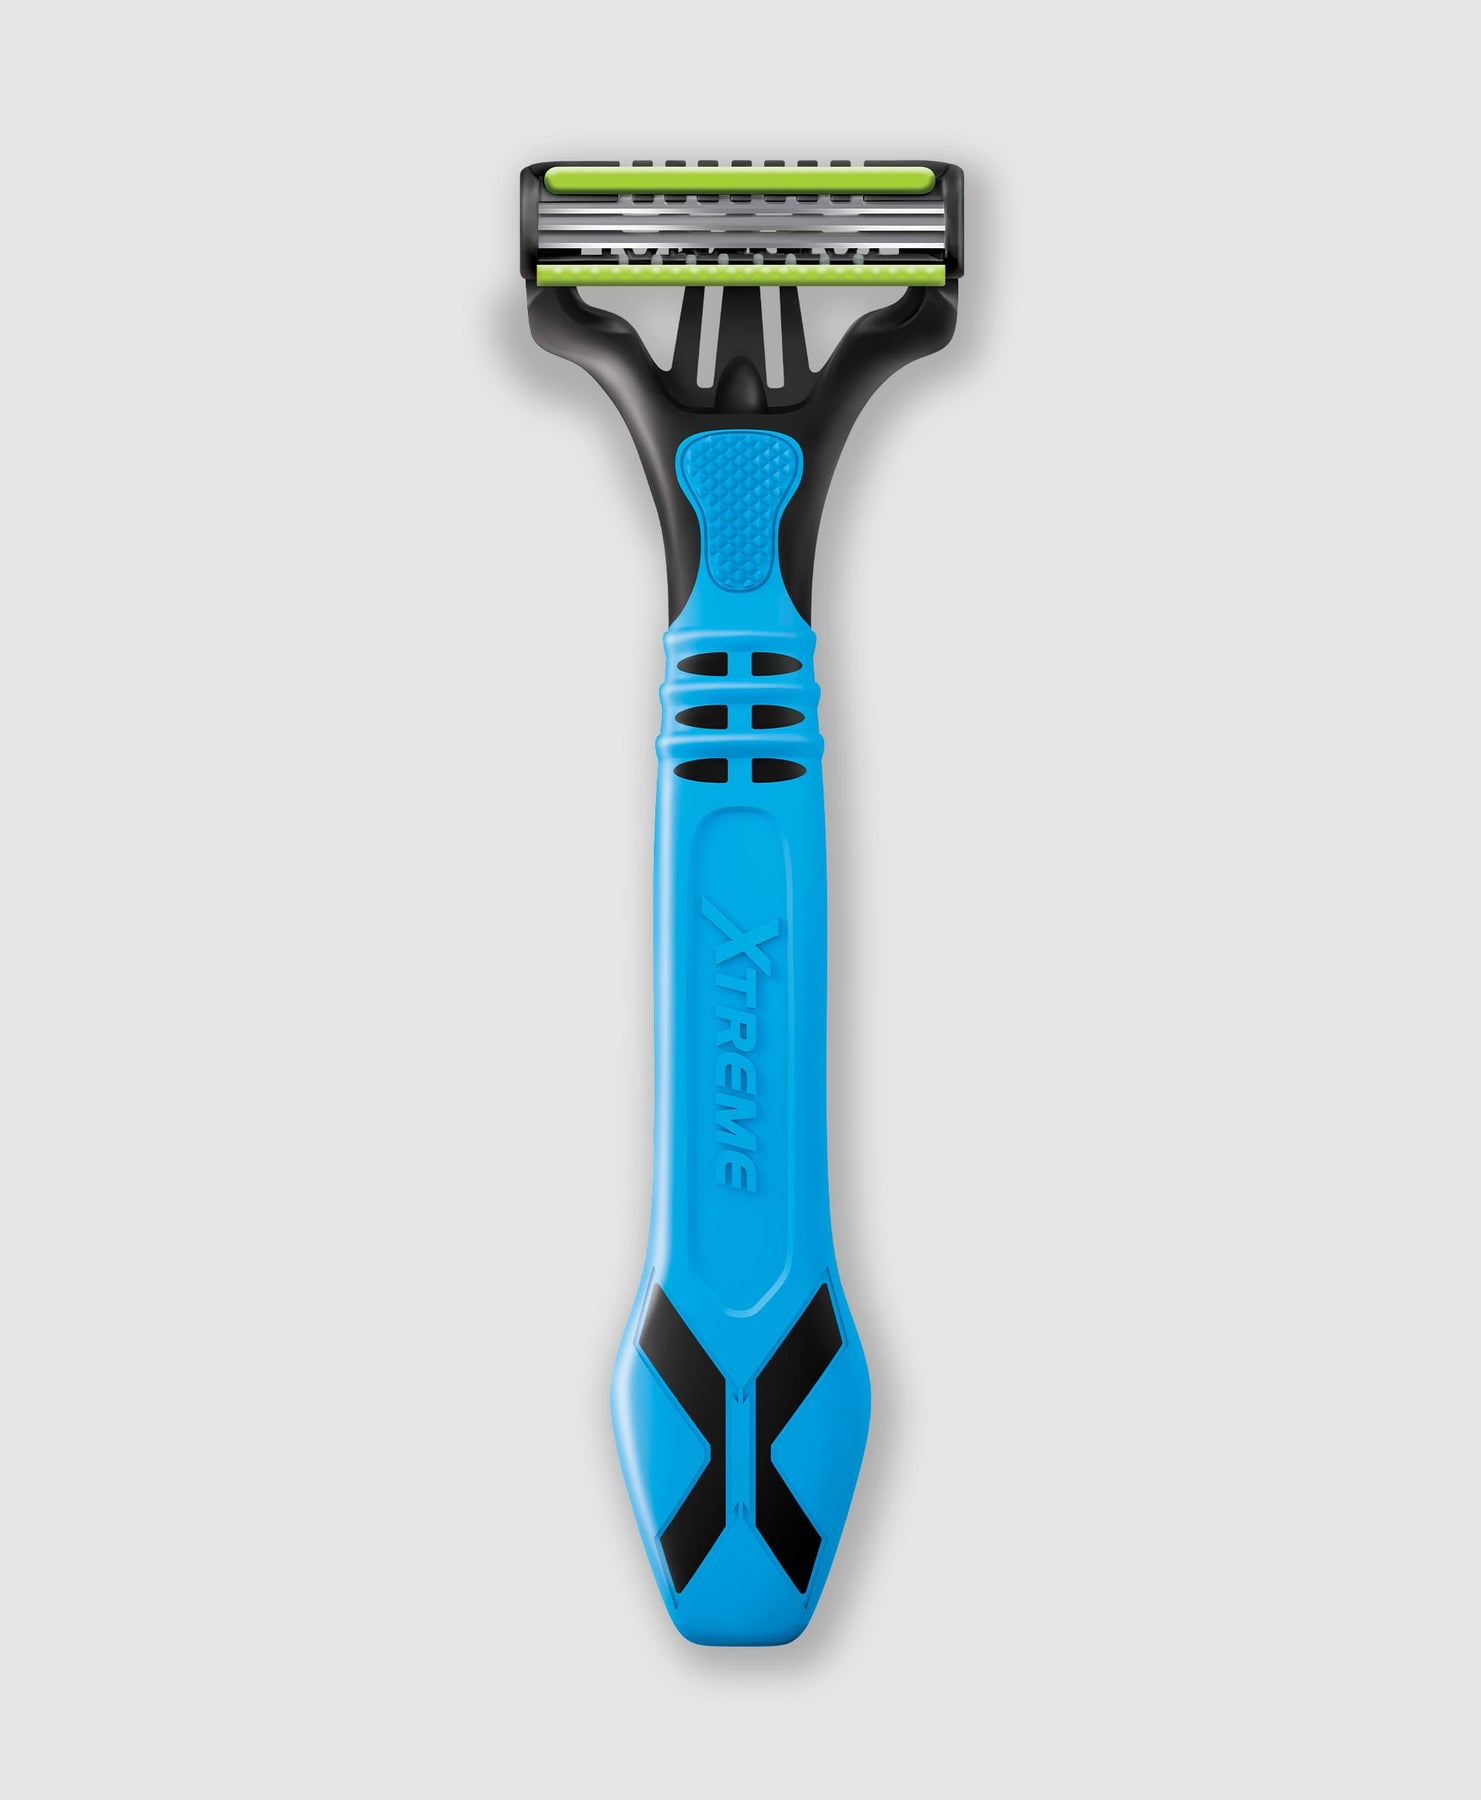 schick xtreme 3 disposable razors